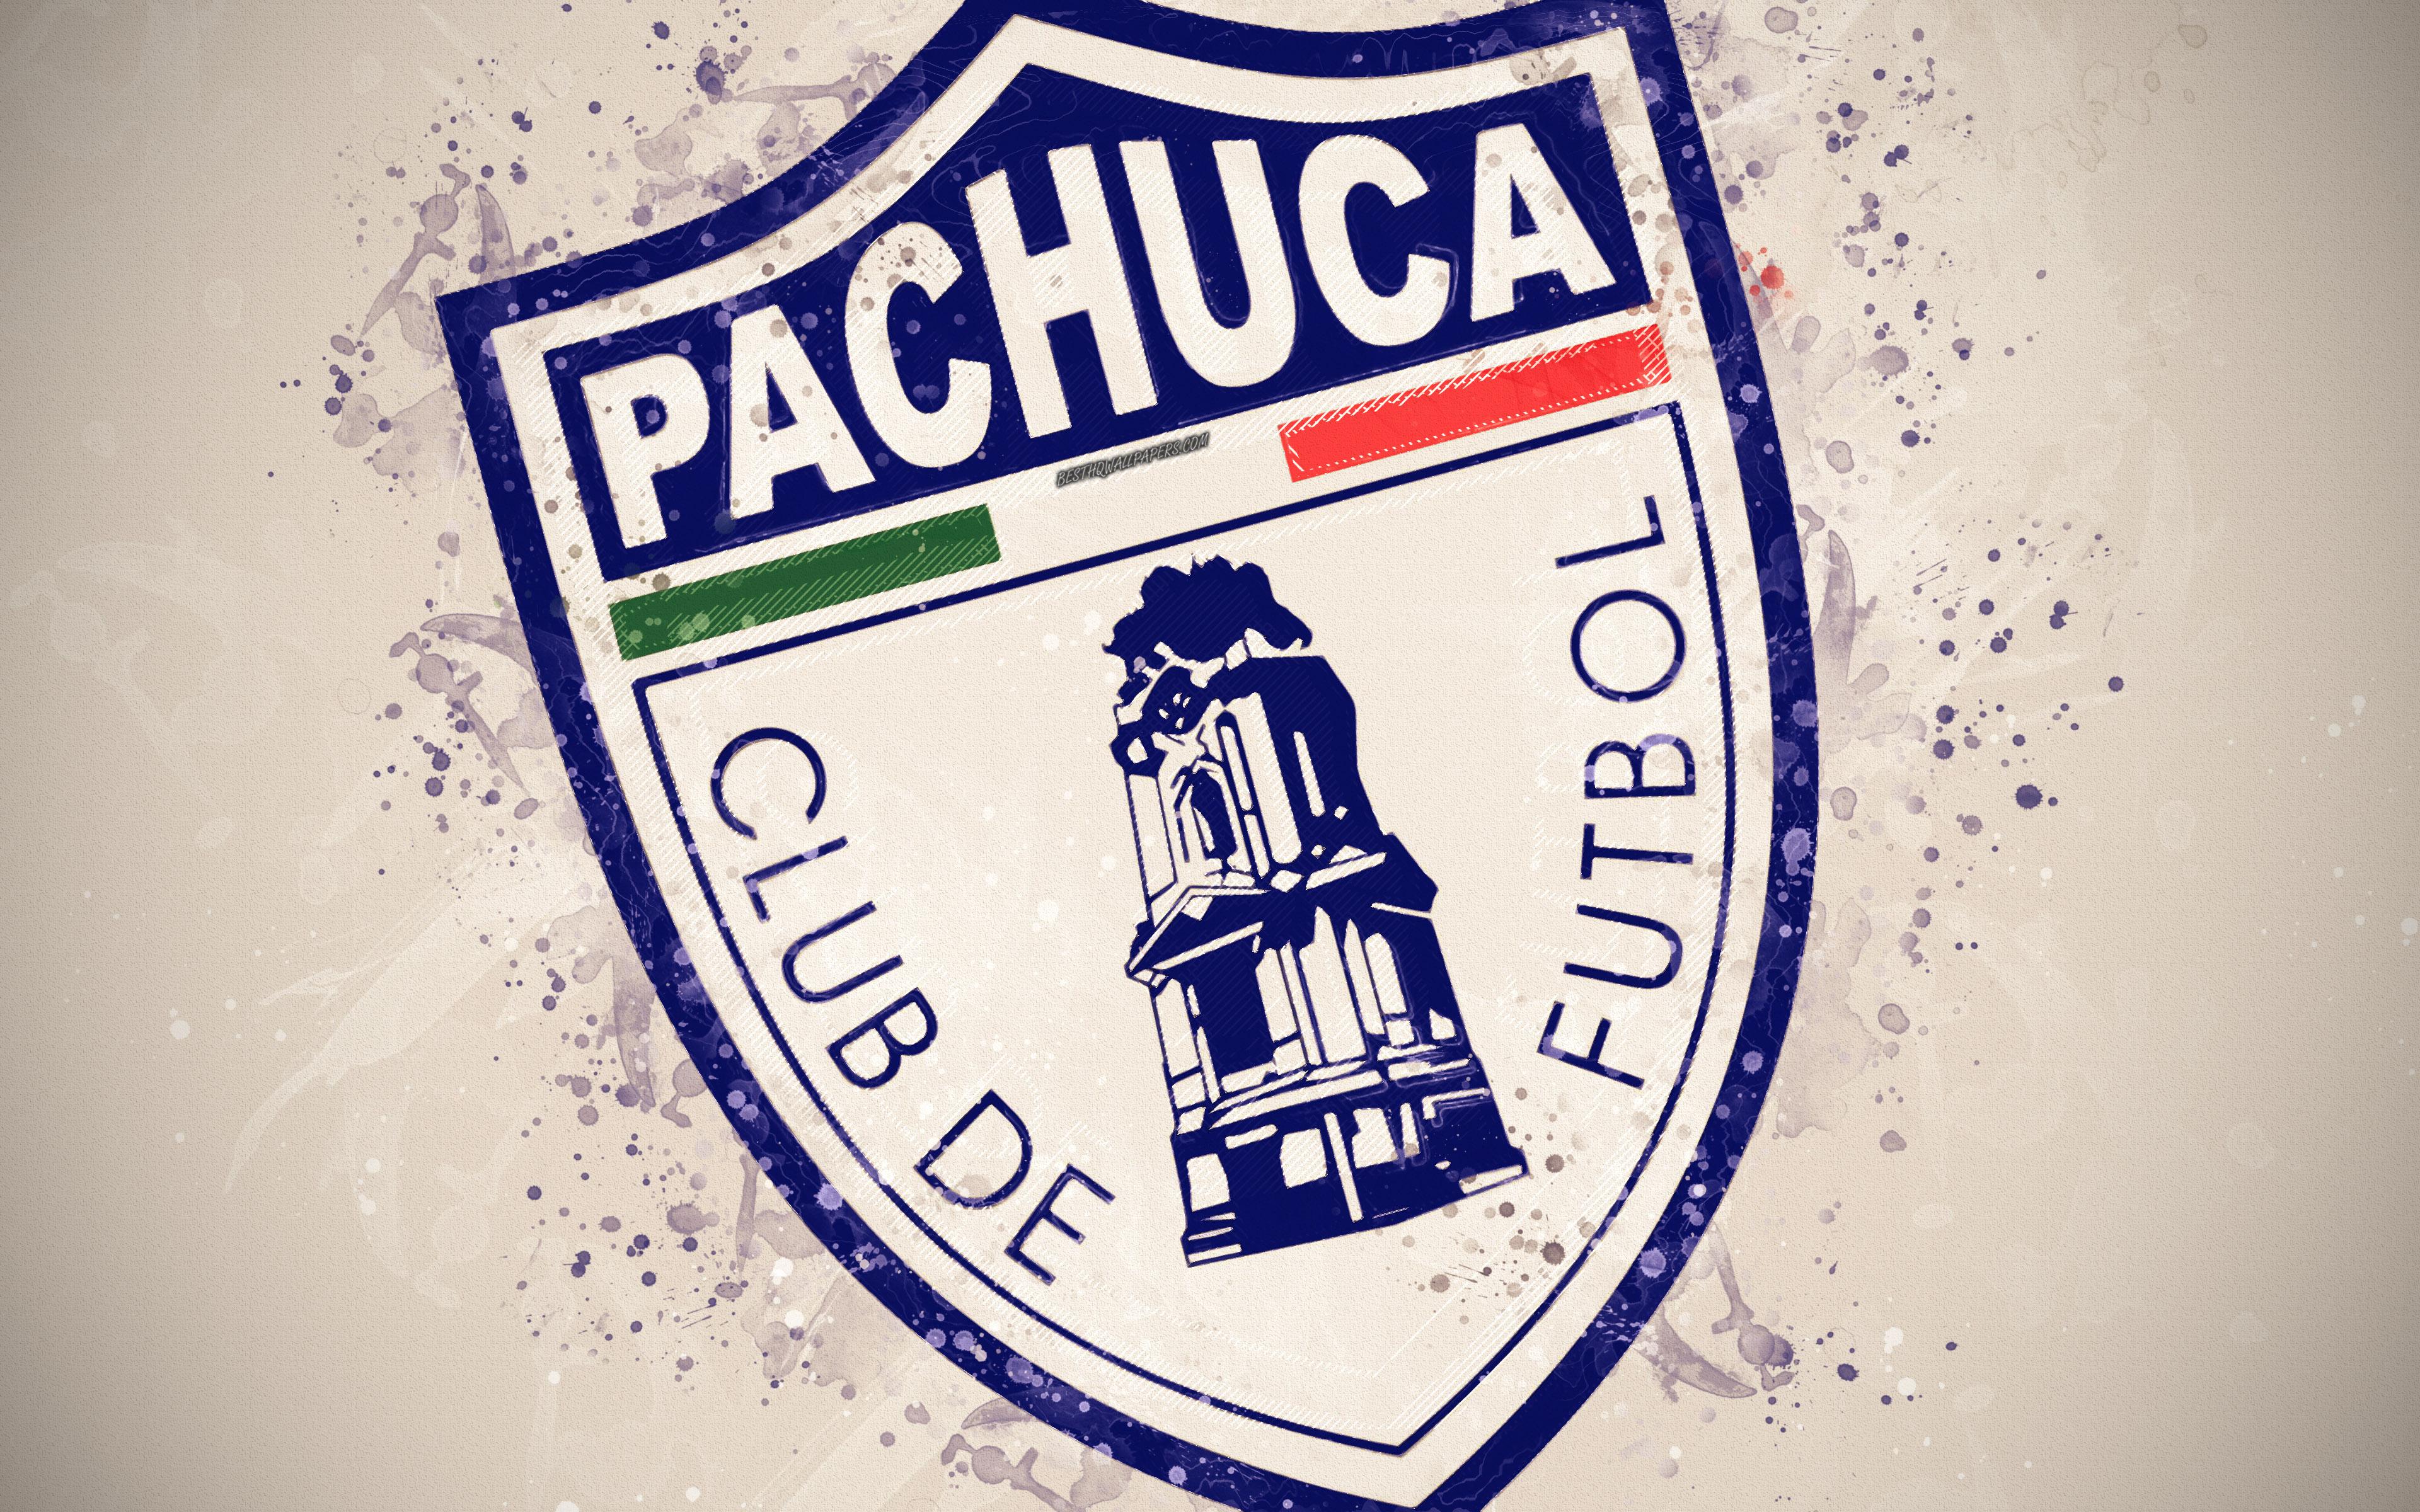 Cf Pachuca Wallpapers